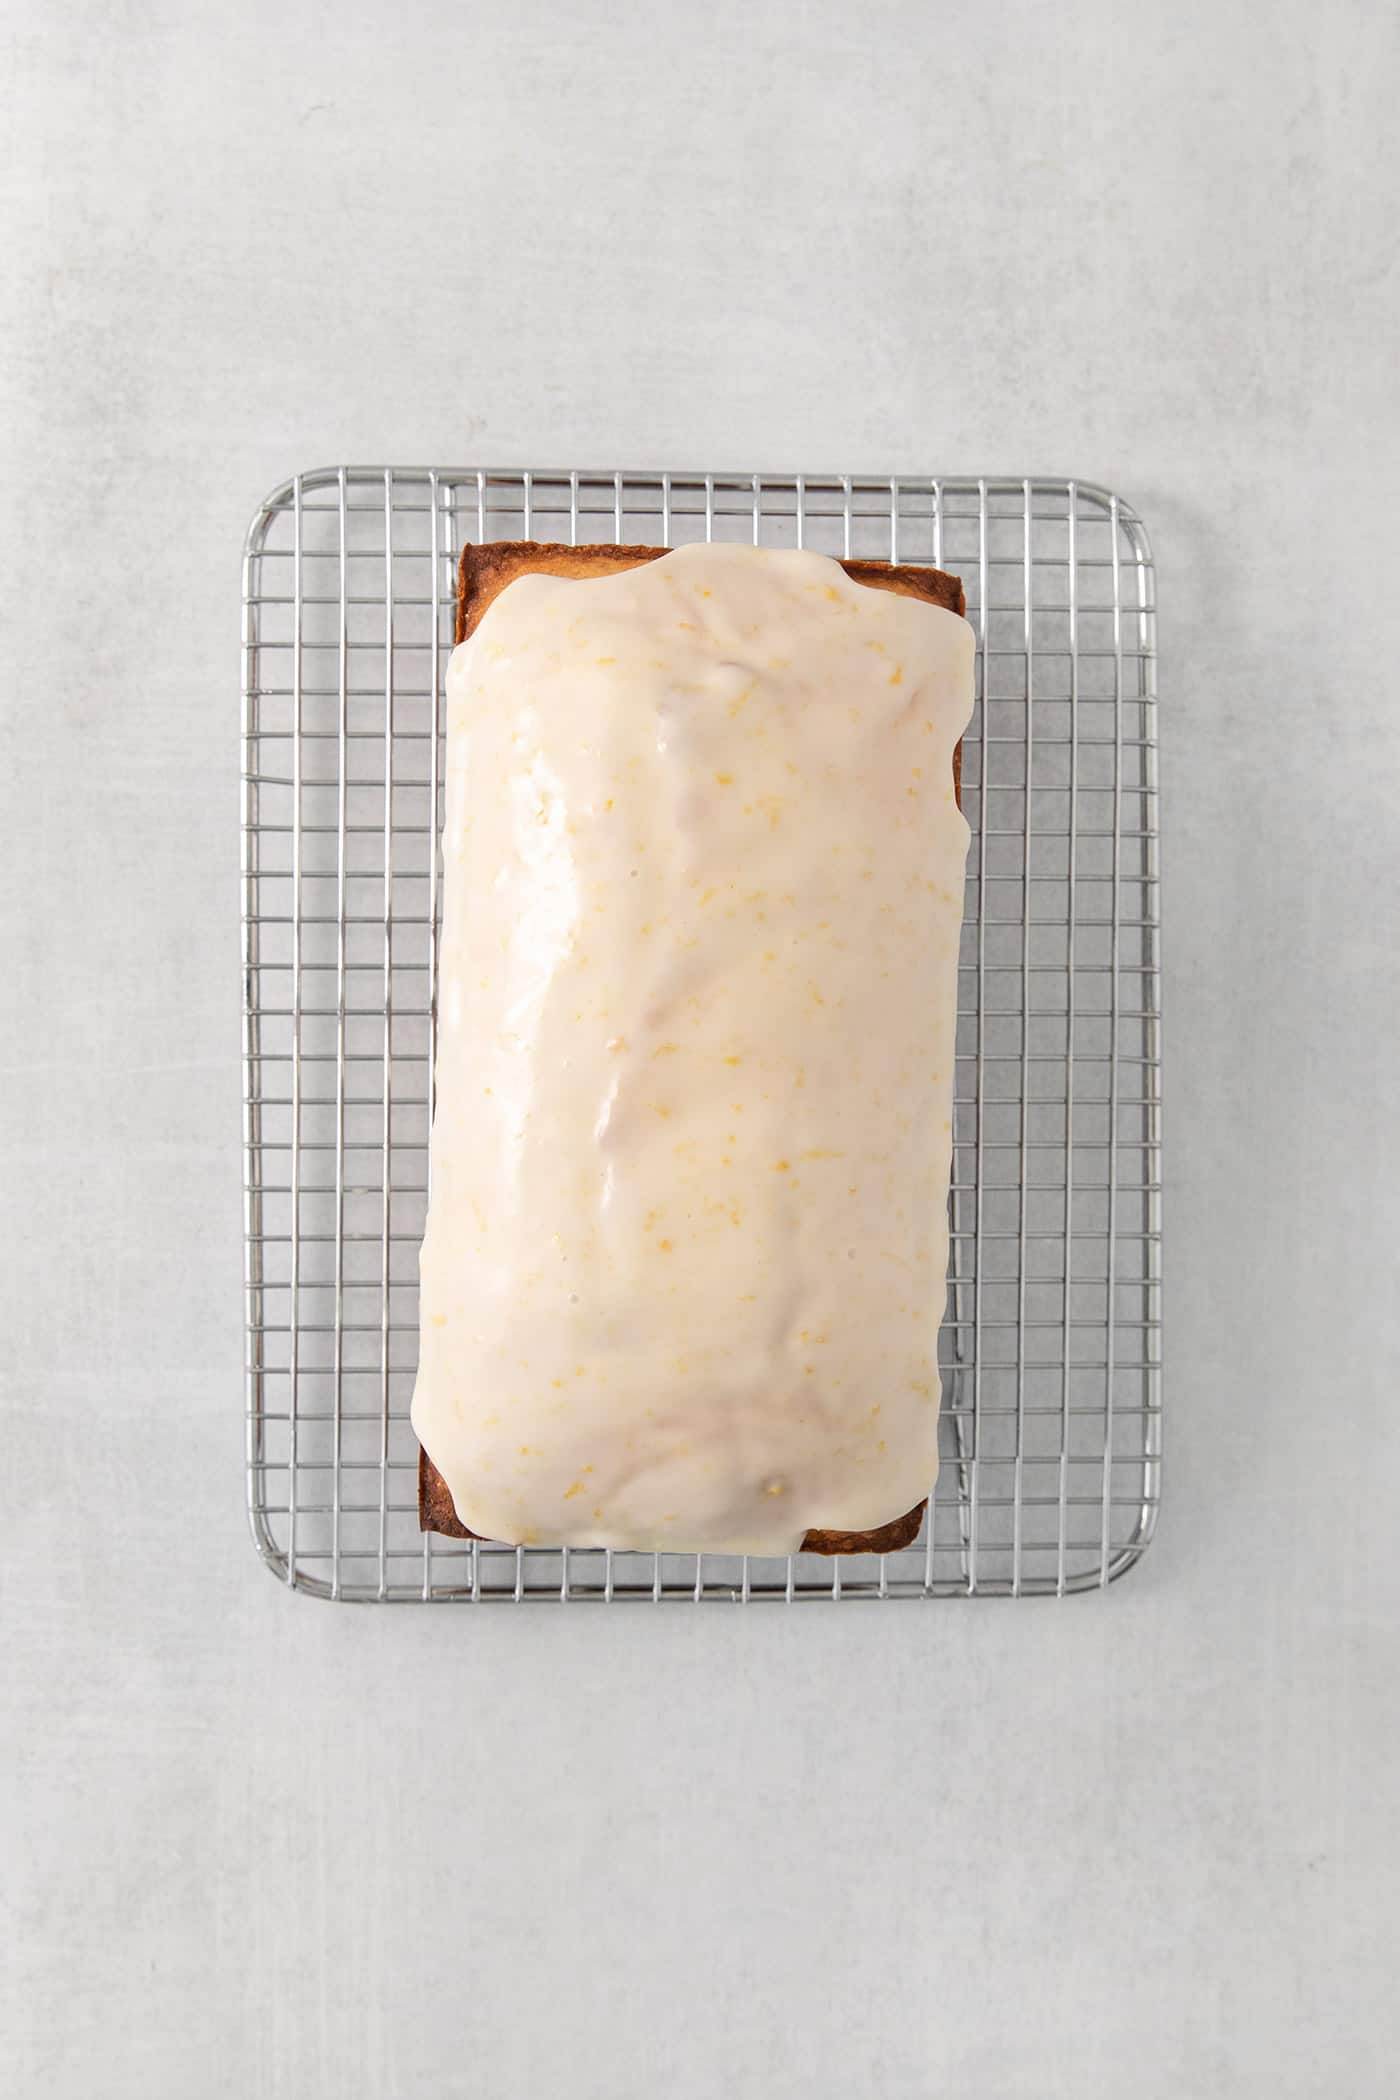 A lemon pound cake topped with lemon glaze.